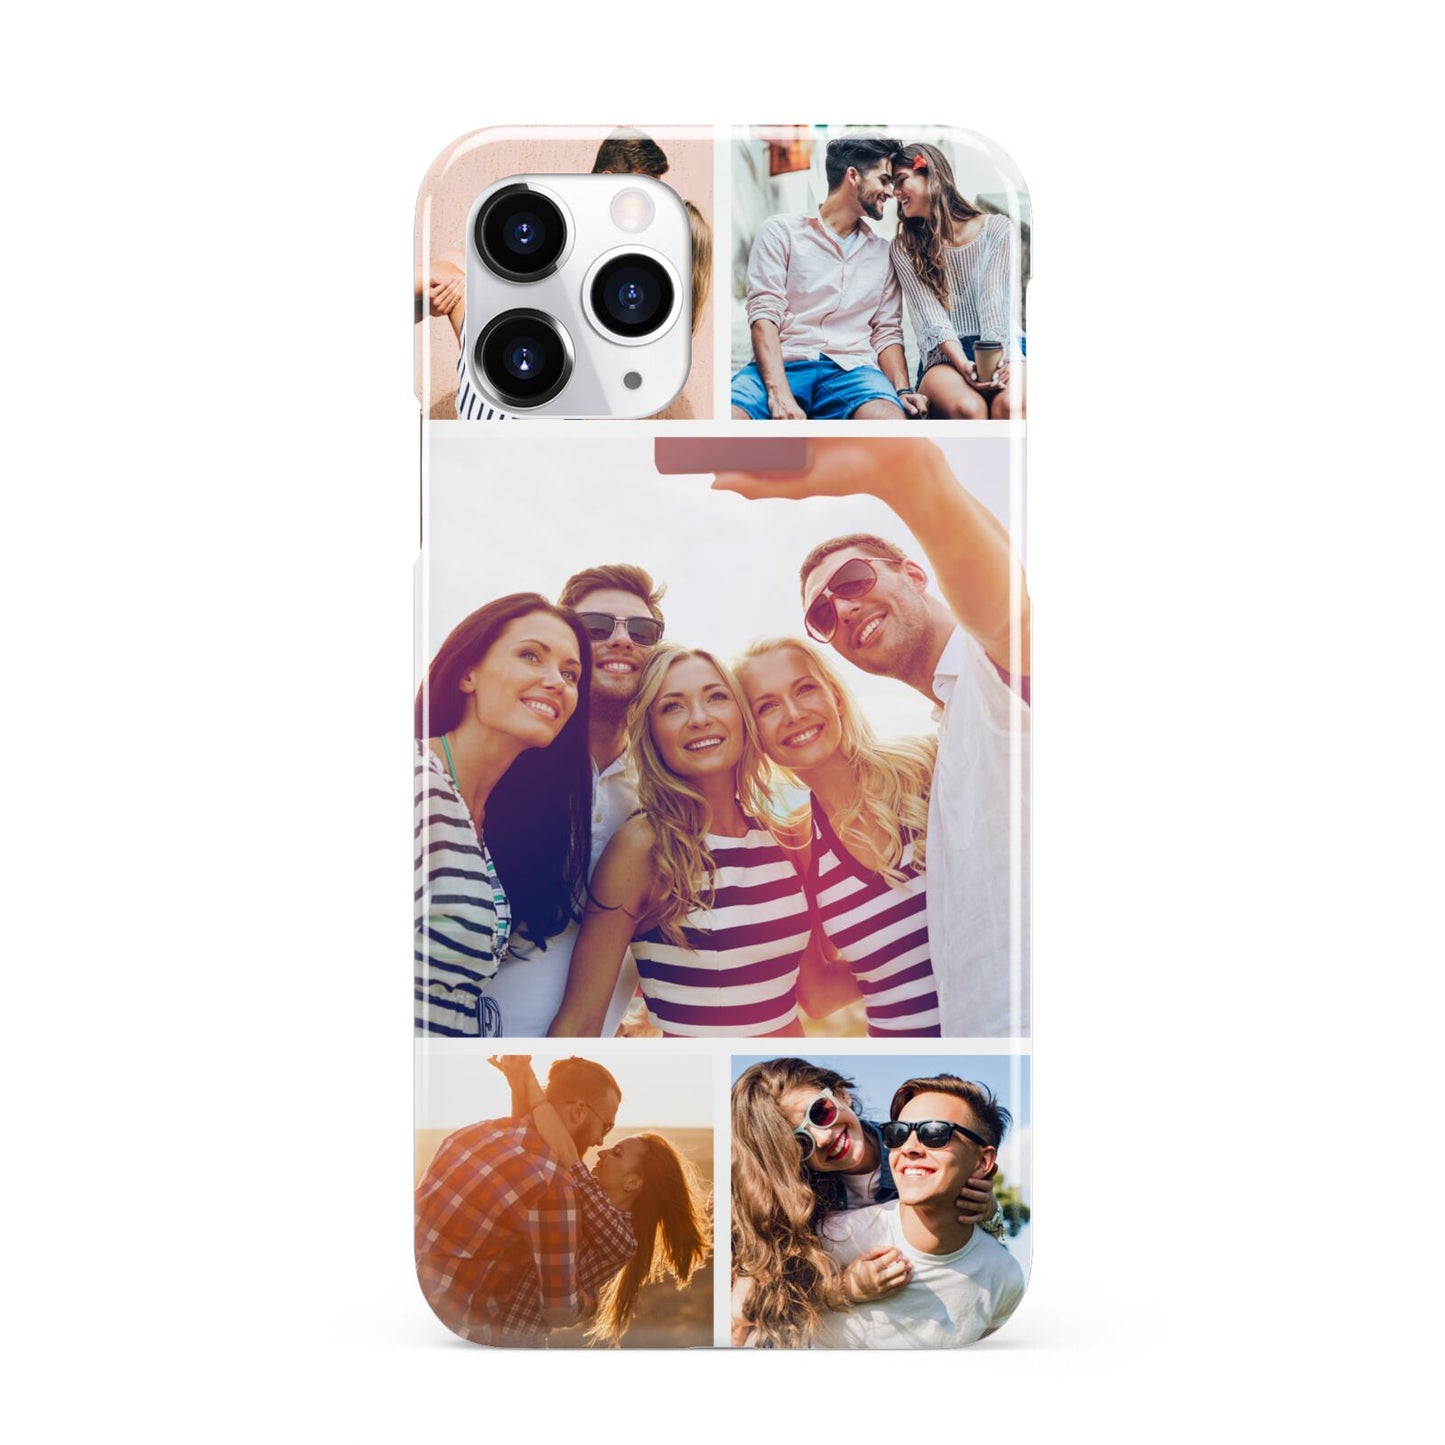 Tile Photo Collage Upload iPhone 11 Pro 3D Snap Case